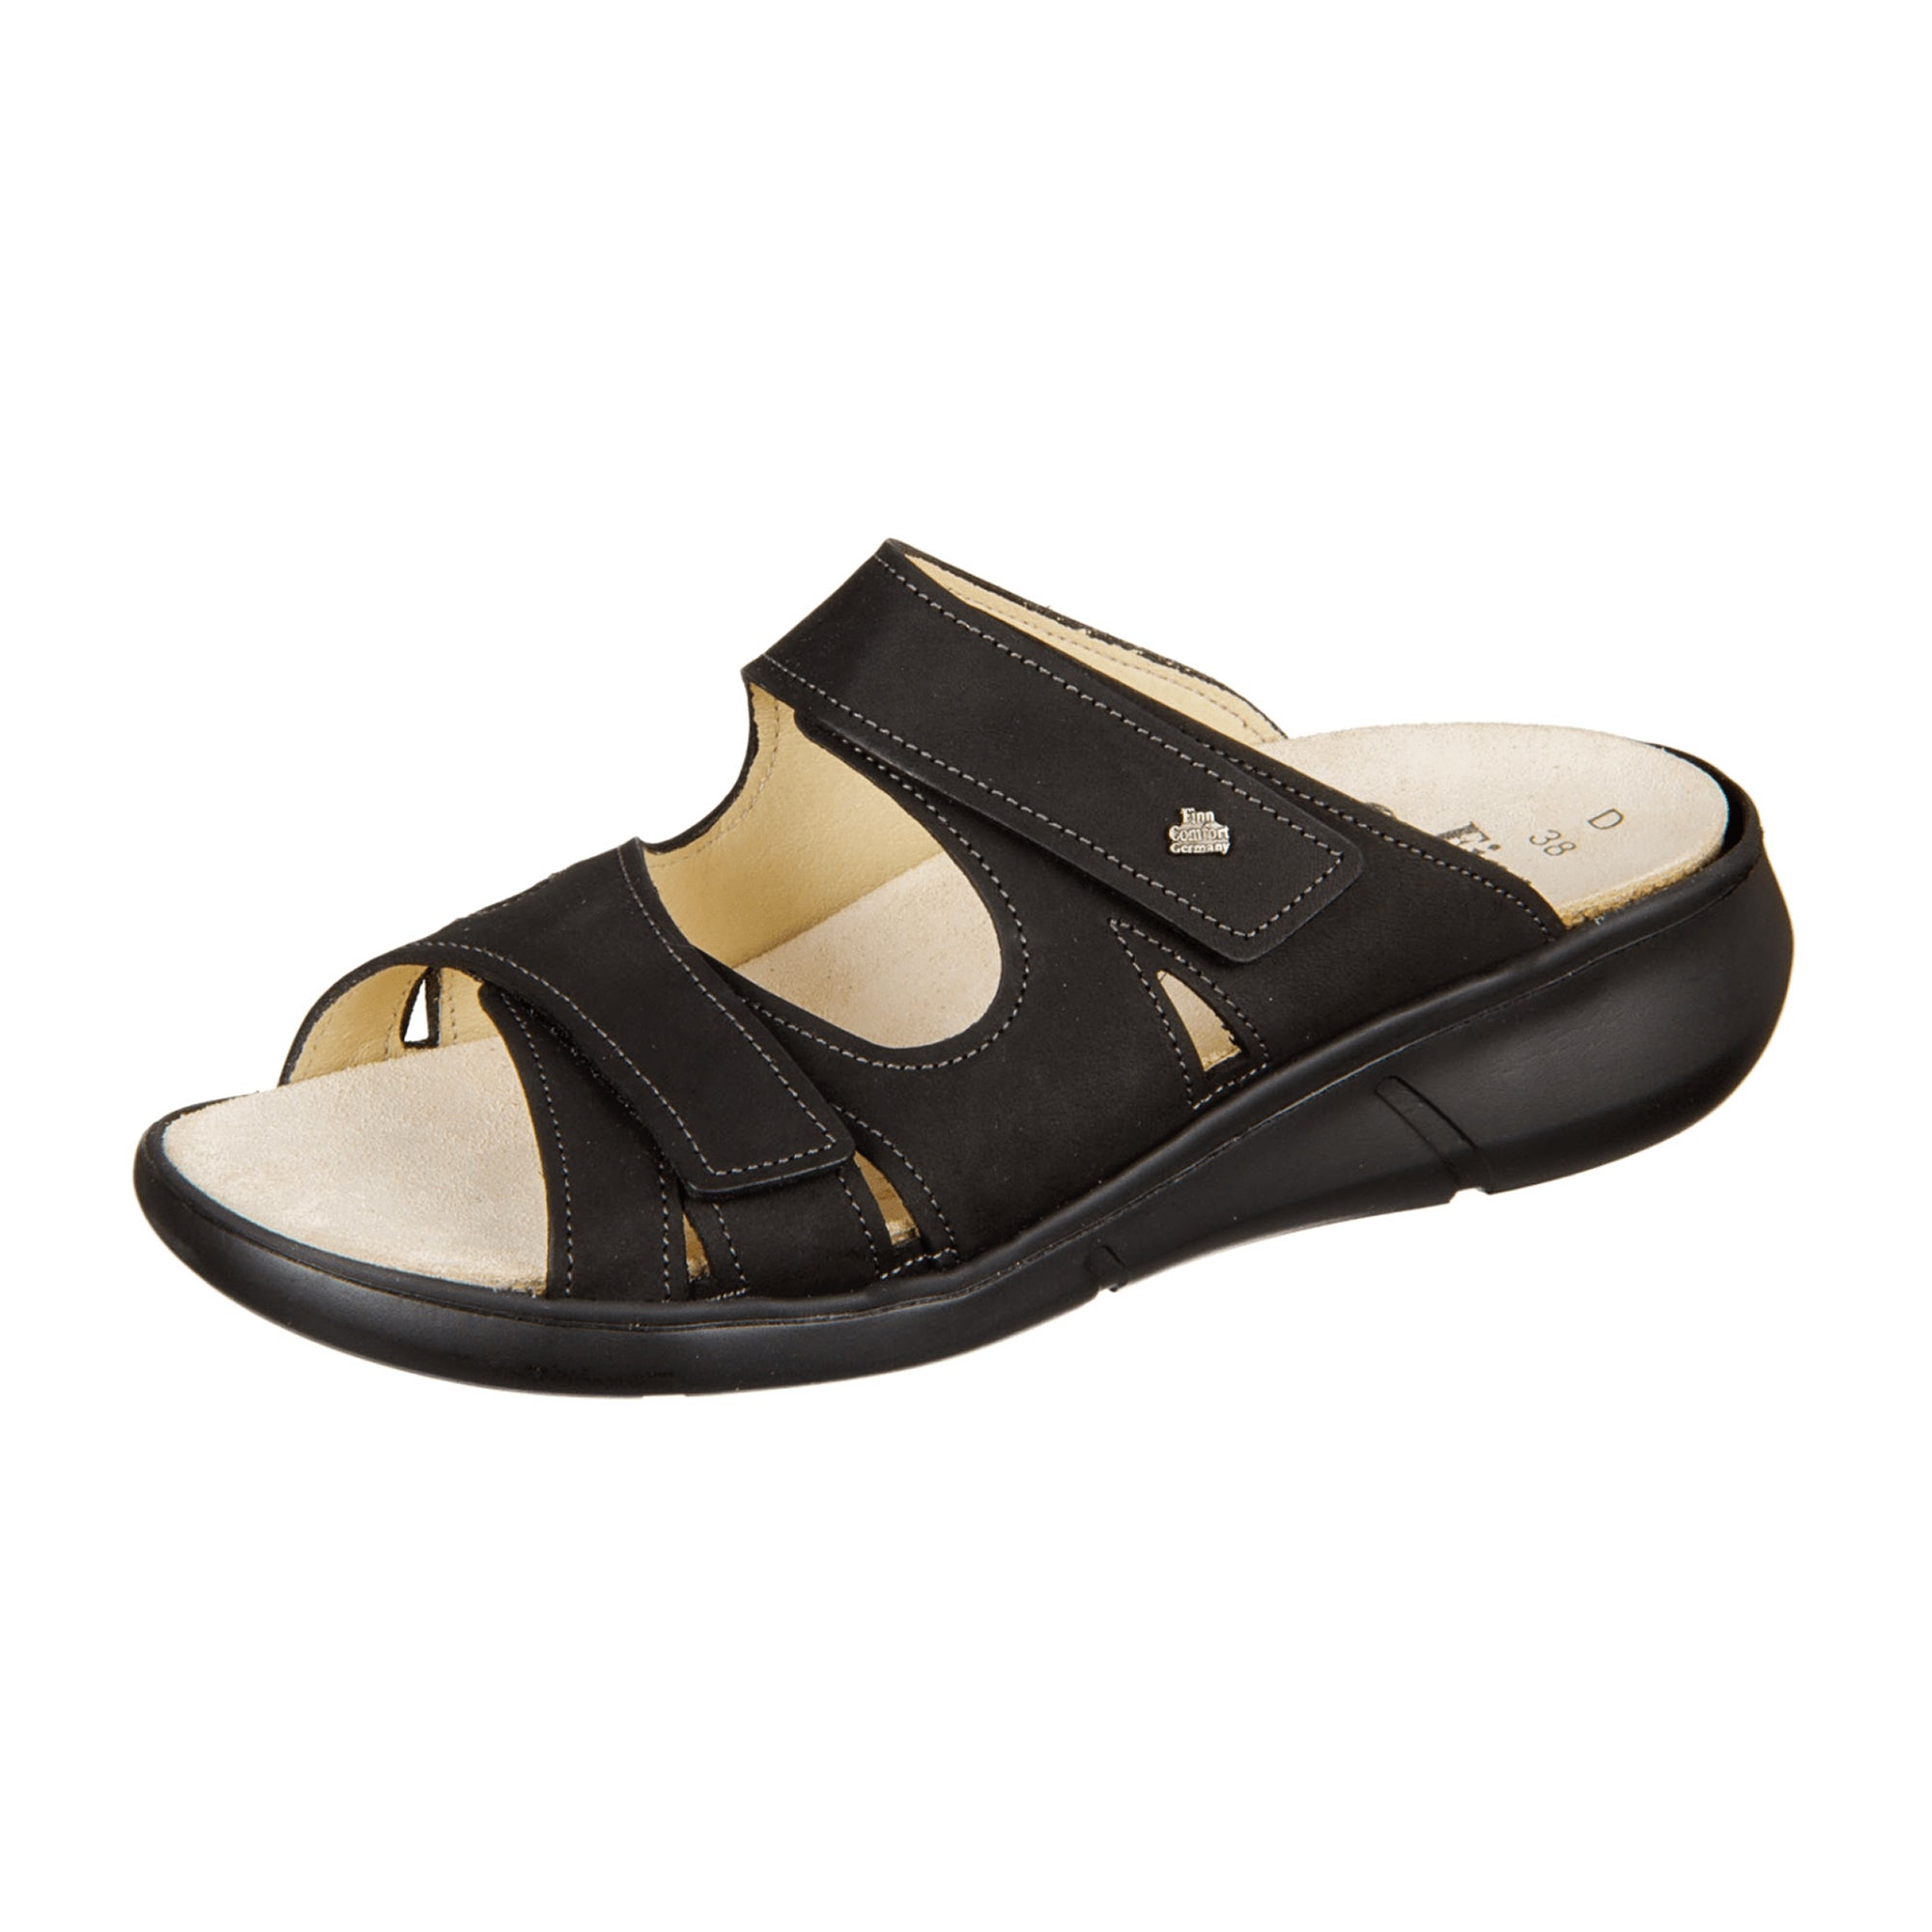 Finn Comfort Palau Women's Comfortable Sandals, Black - Stylish & Durable